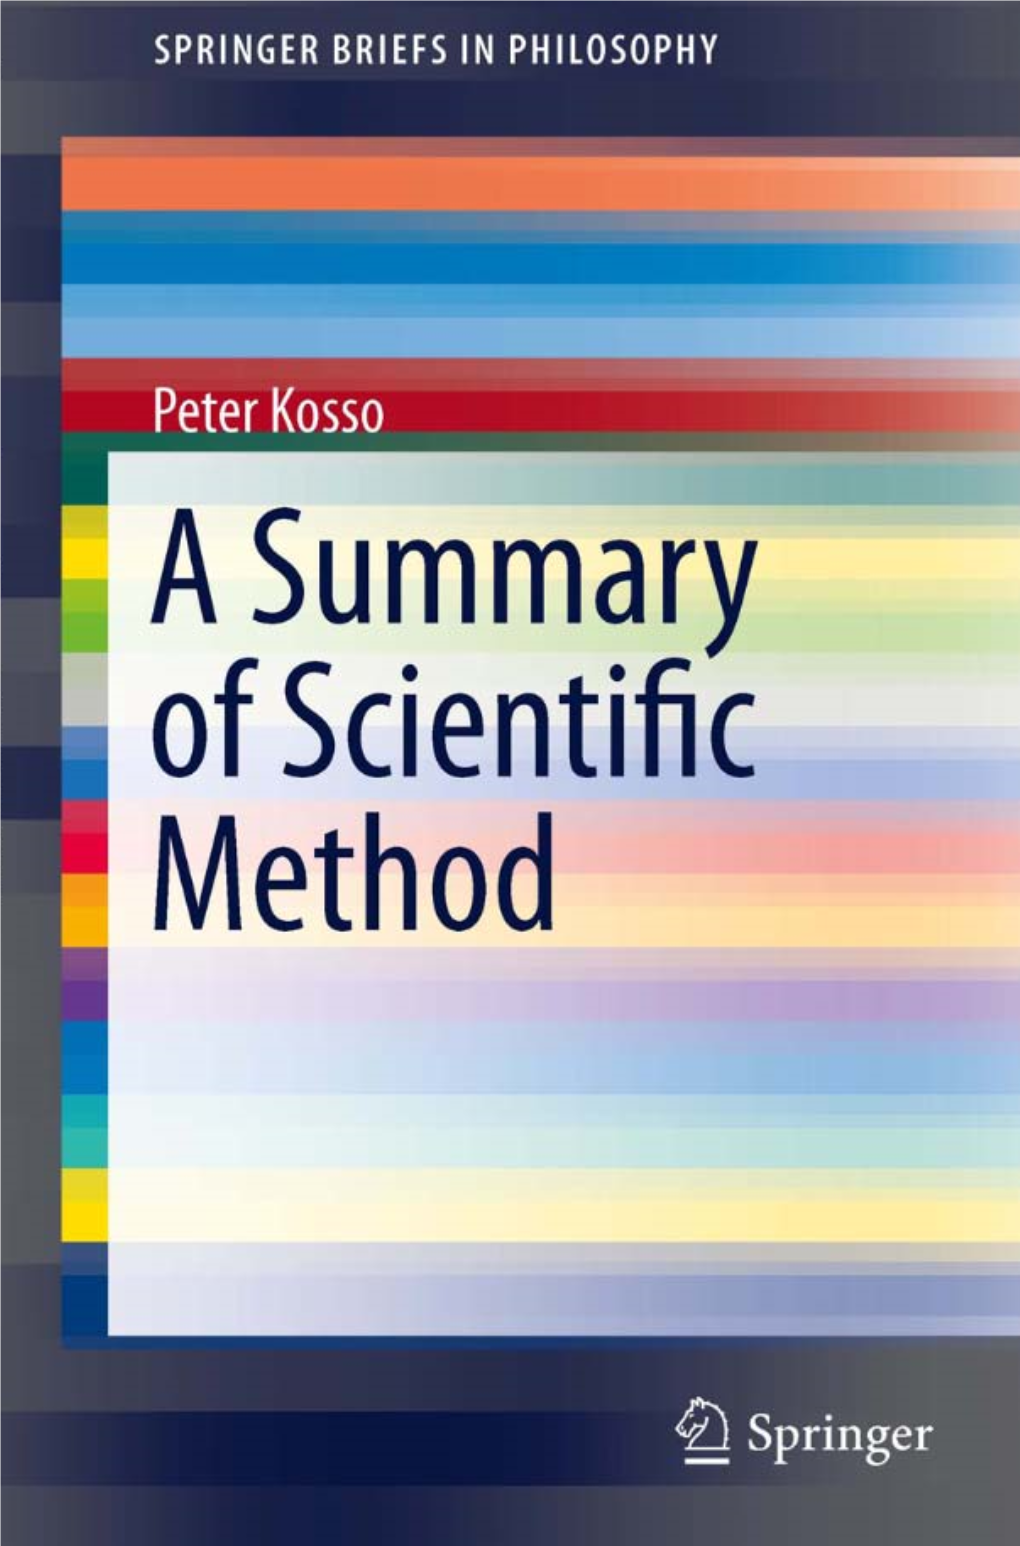 A Summary of Scientific Method